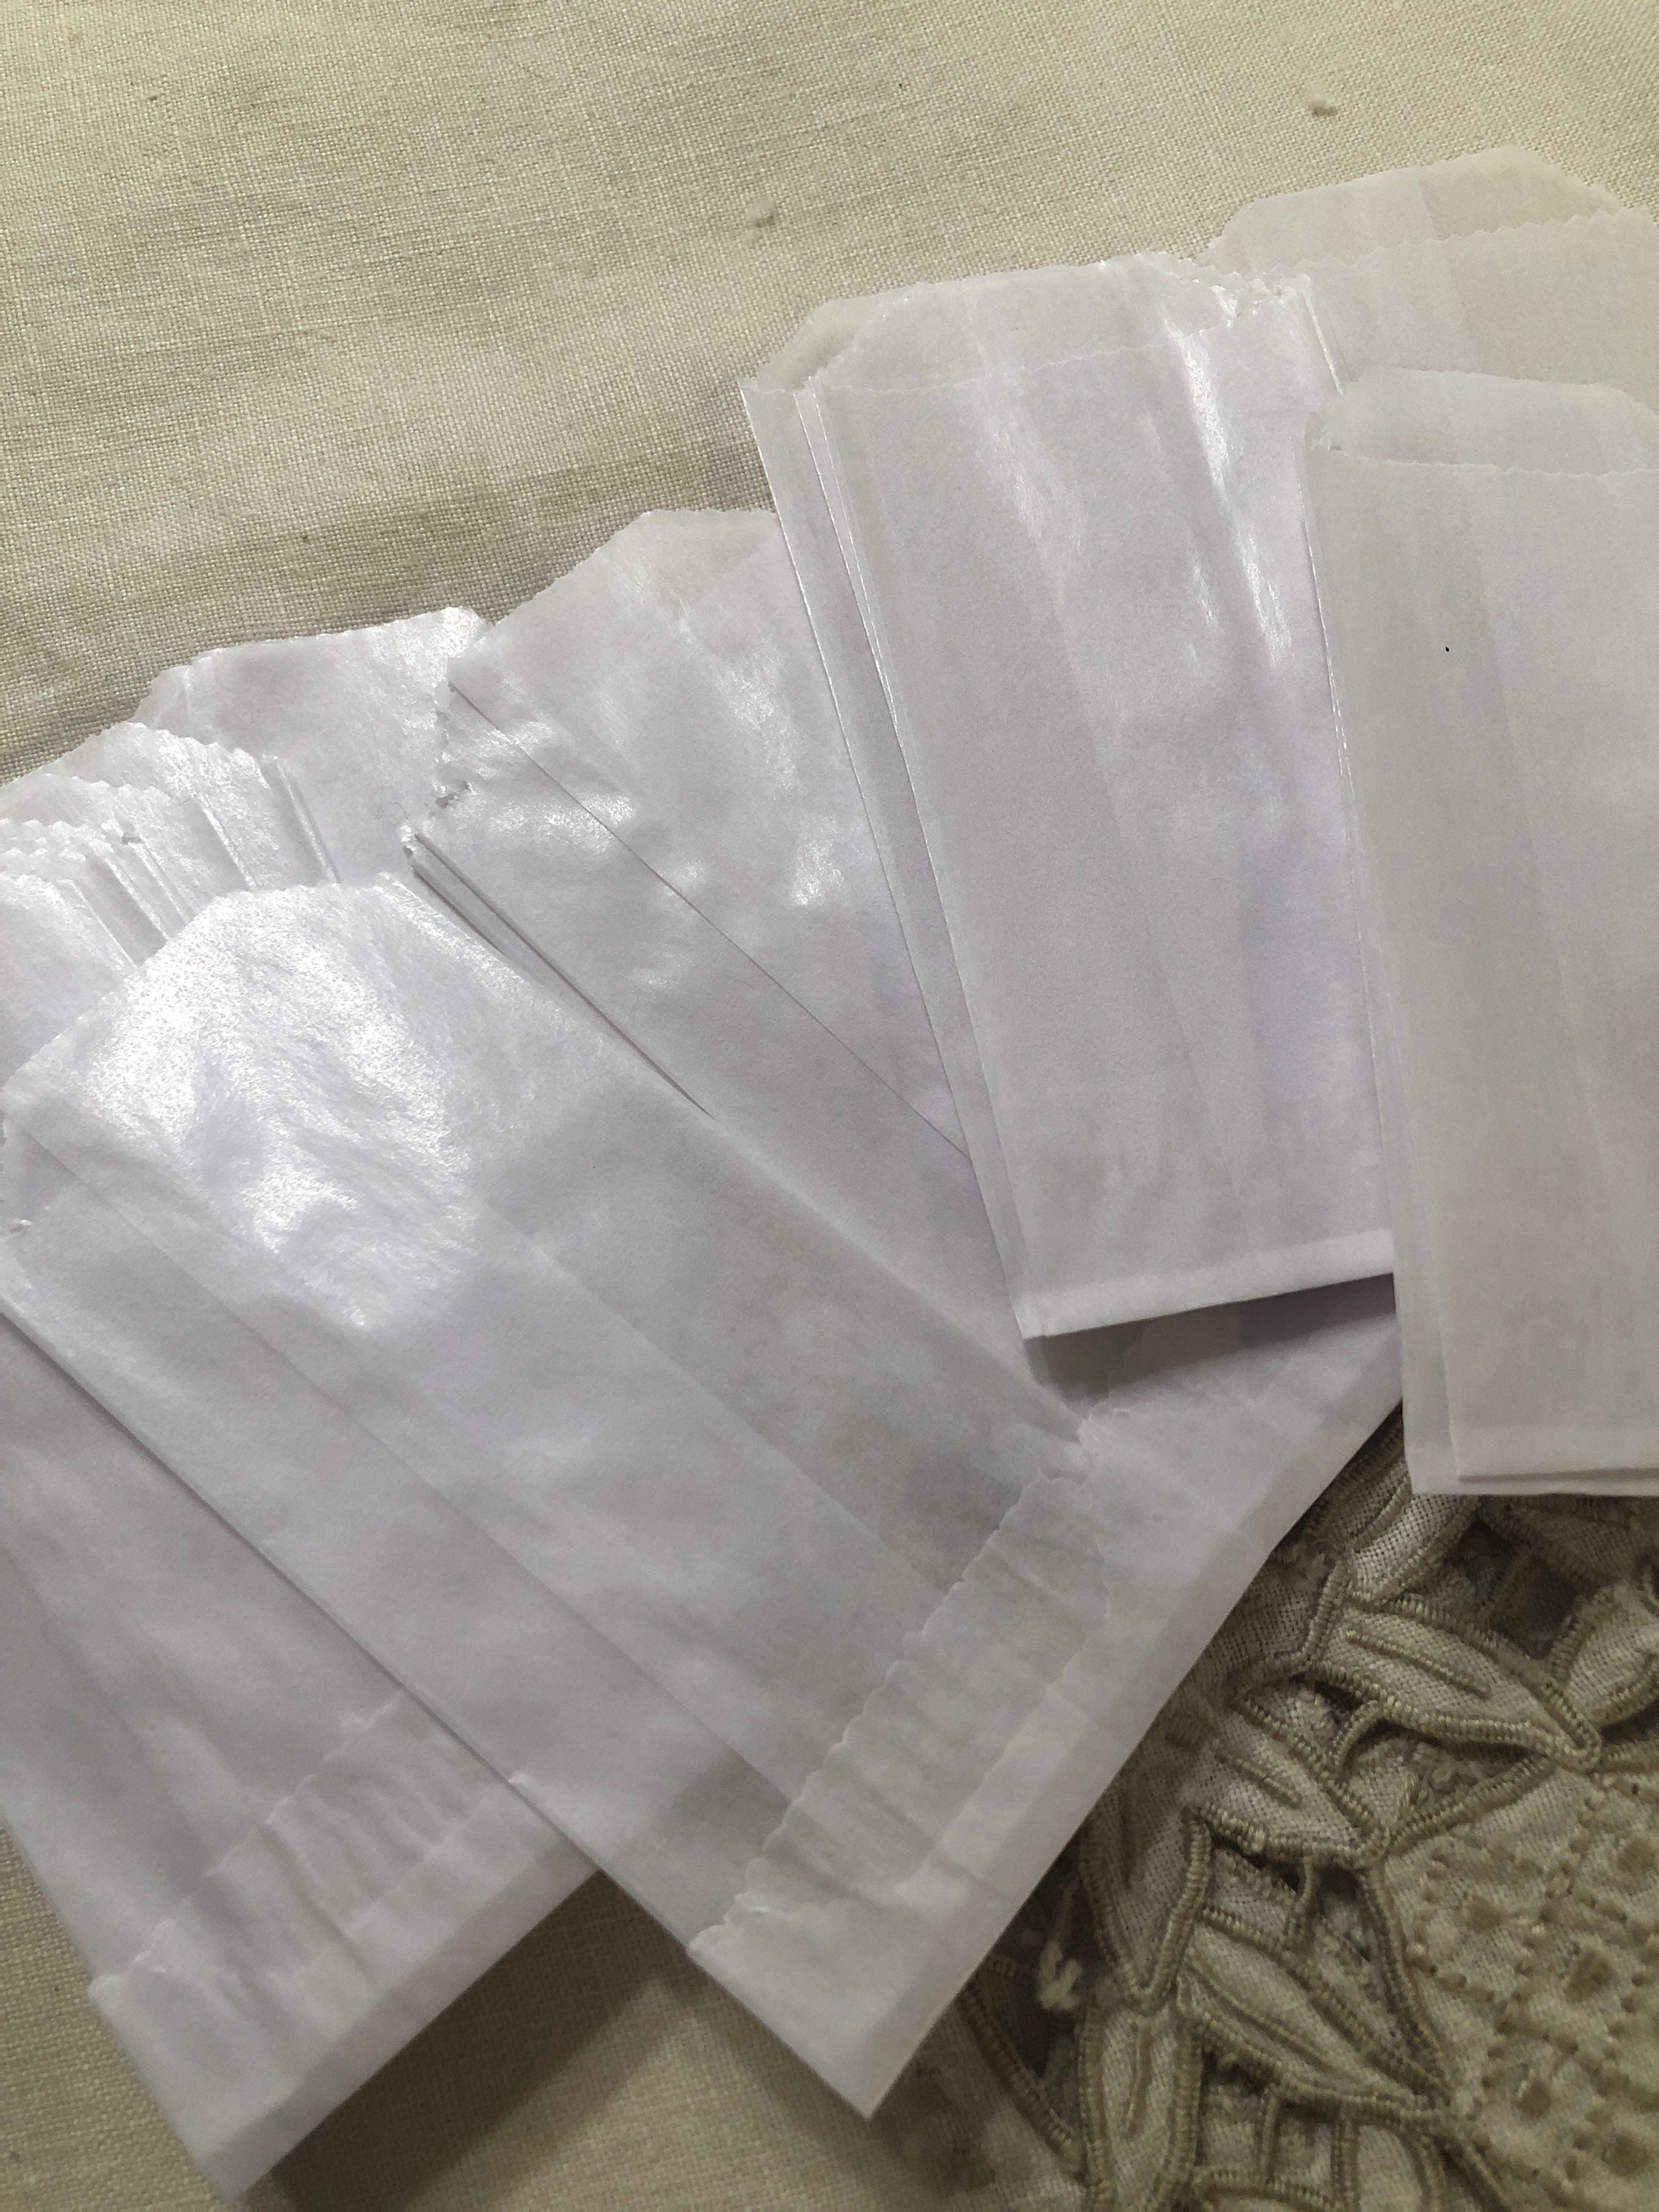 50 pack - flat glassine bags, 3.75 x 6.25 translucent waxed